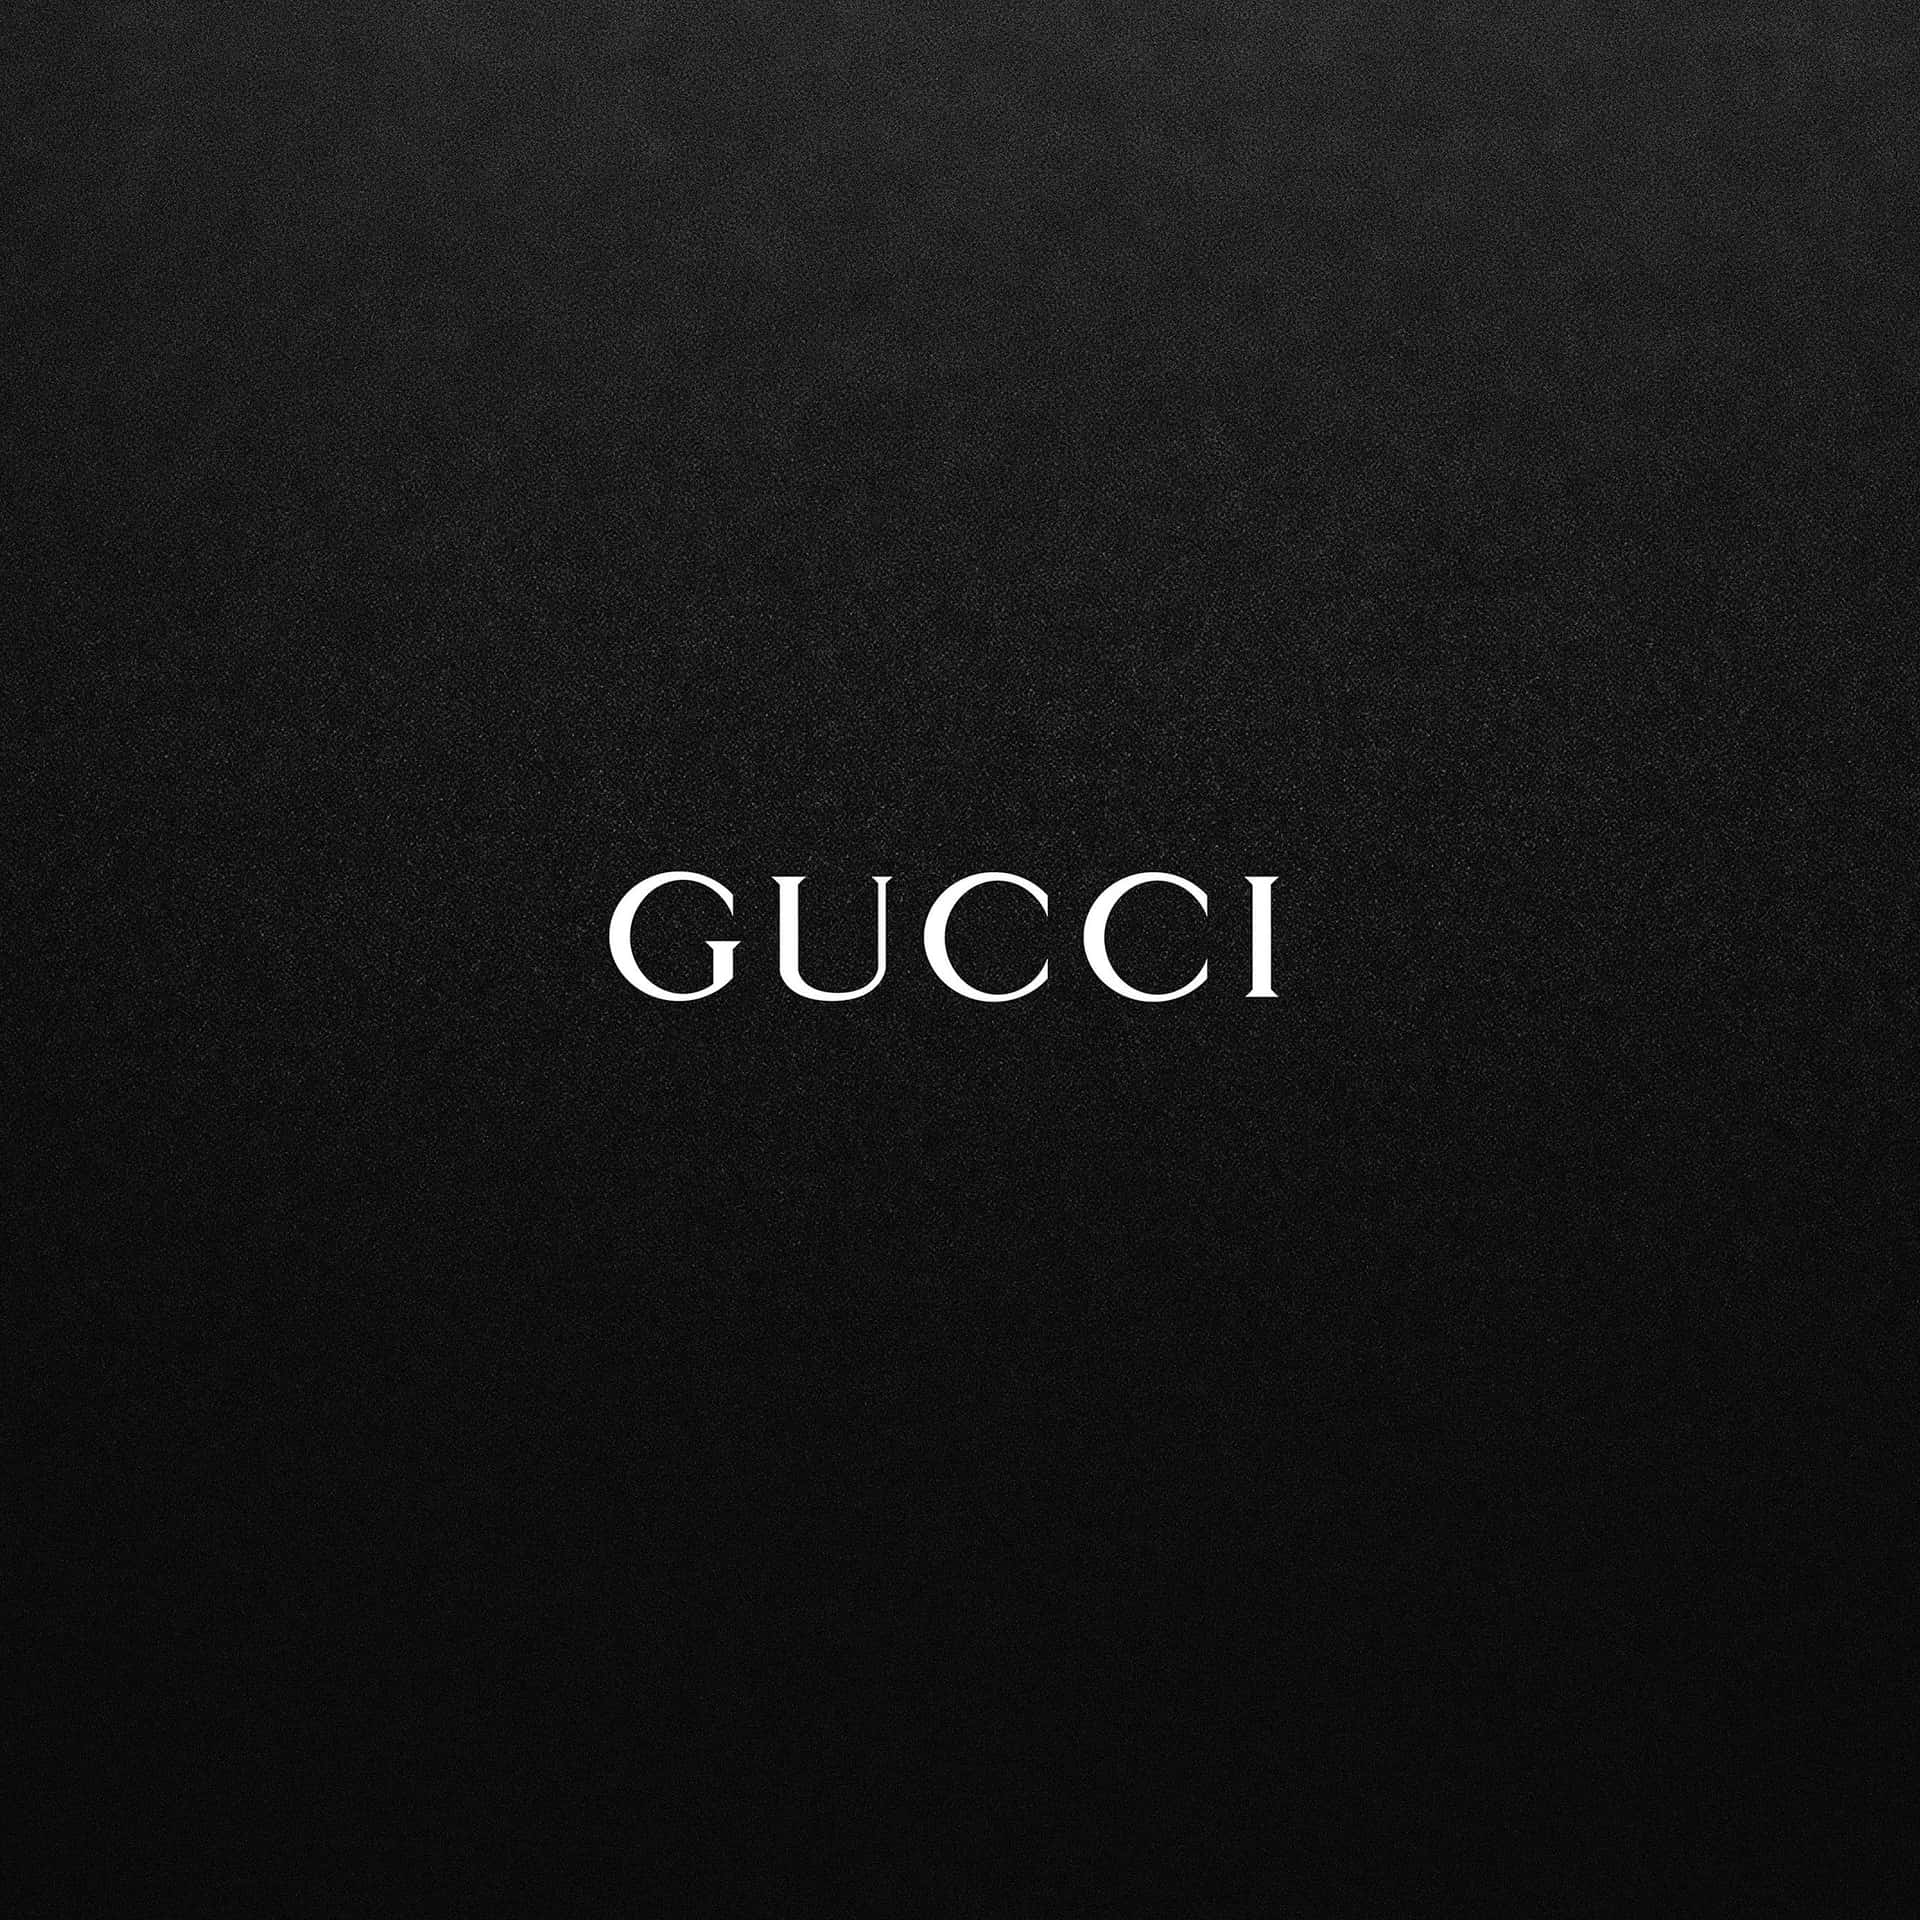 Plain White Gucci Text Background